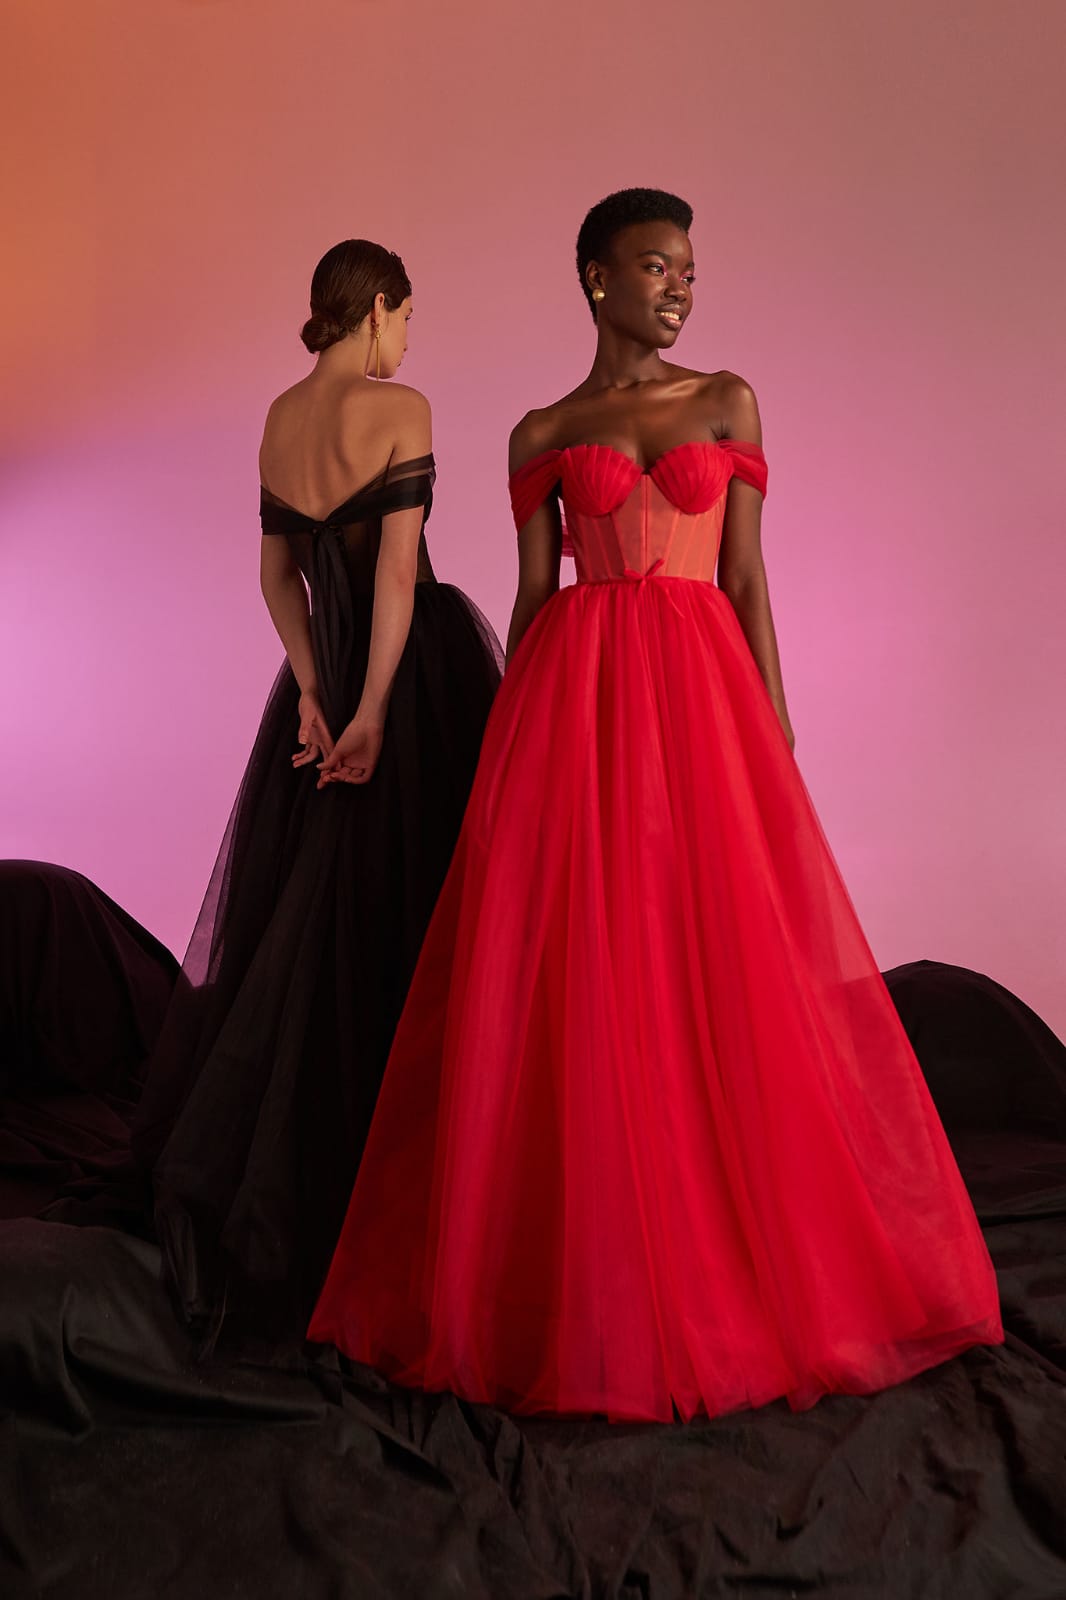 Olyamak Gabi Red Dress - Front View and Olyamak Gabi Black Dress - Back View Rofial Beauty